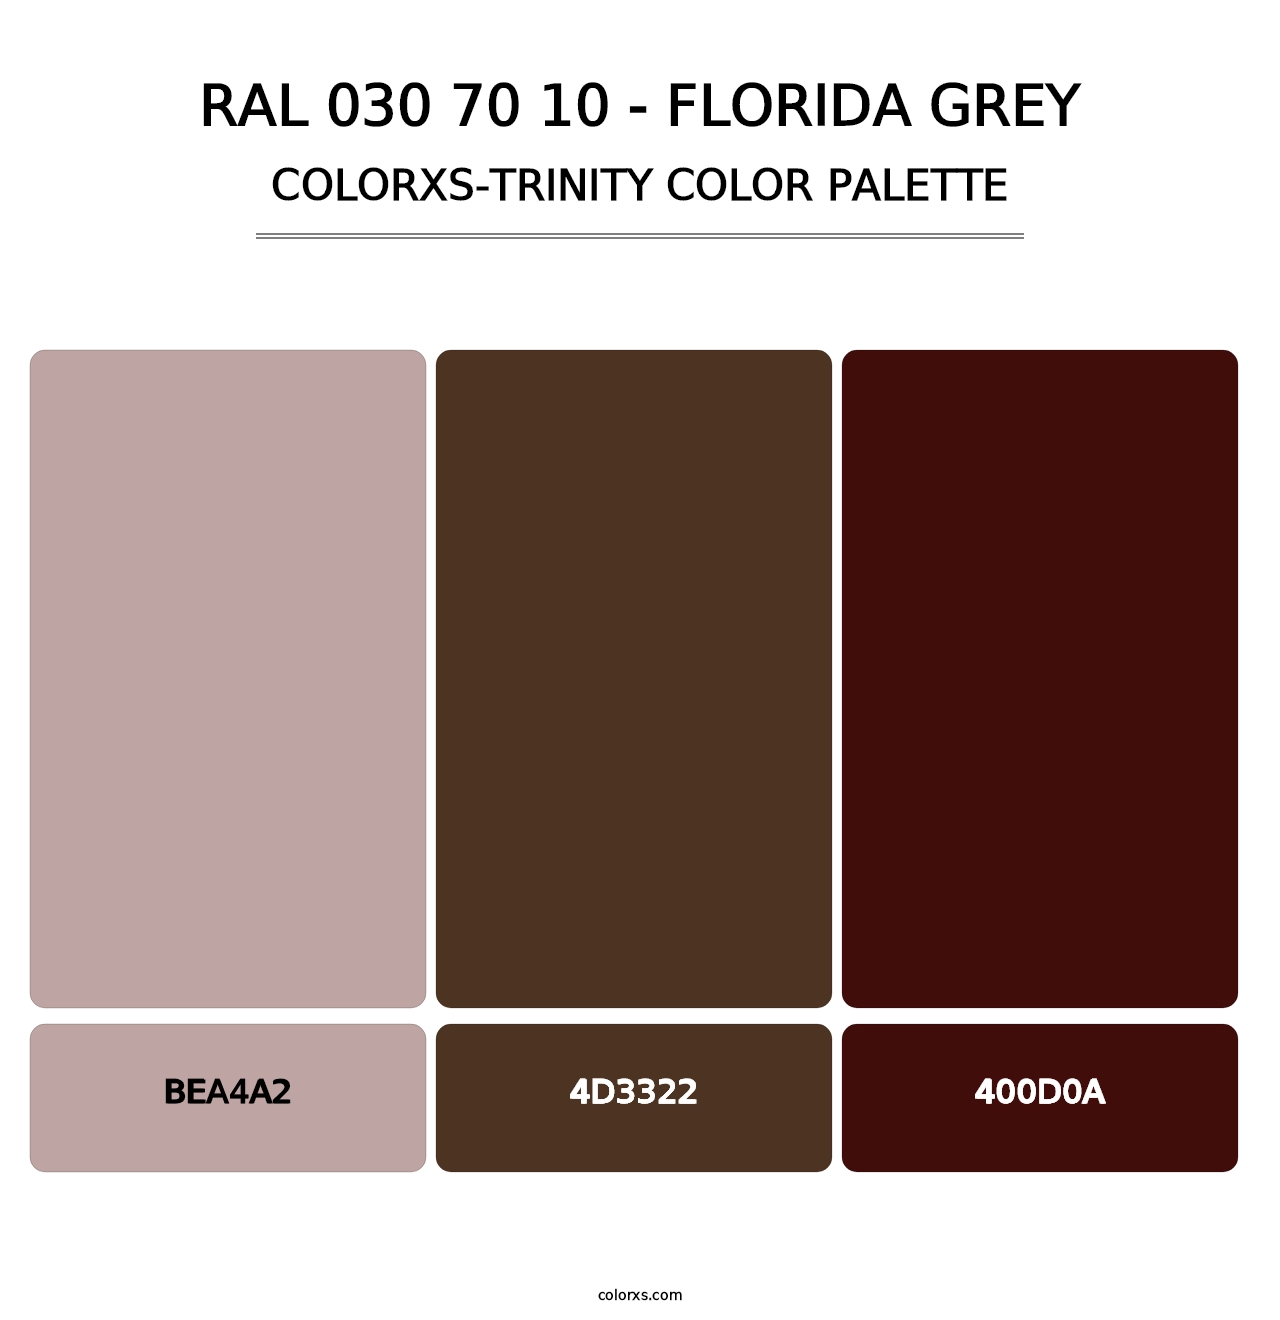 RAL 030 70 10 - Florida Grey - Colorxs Trinity Palette